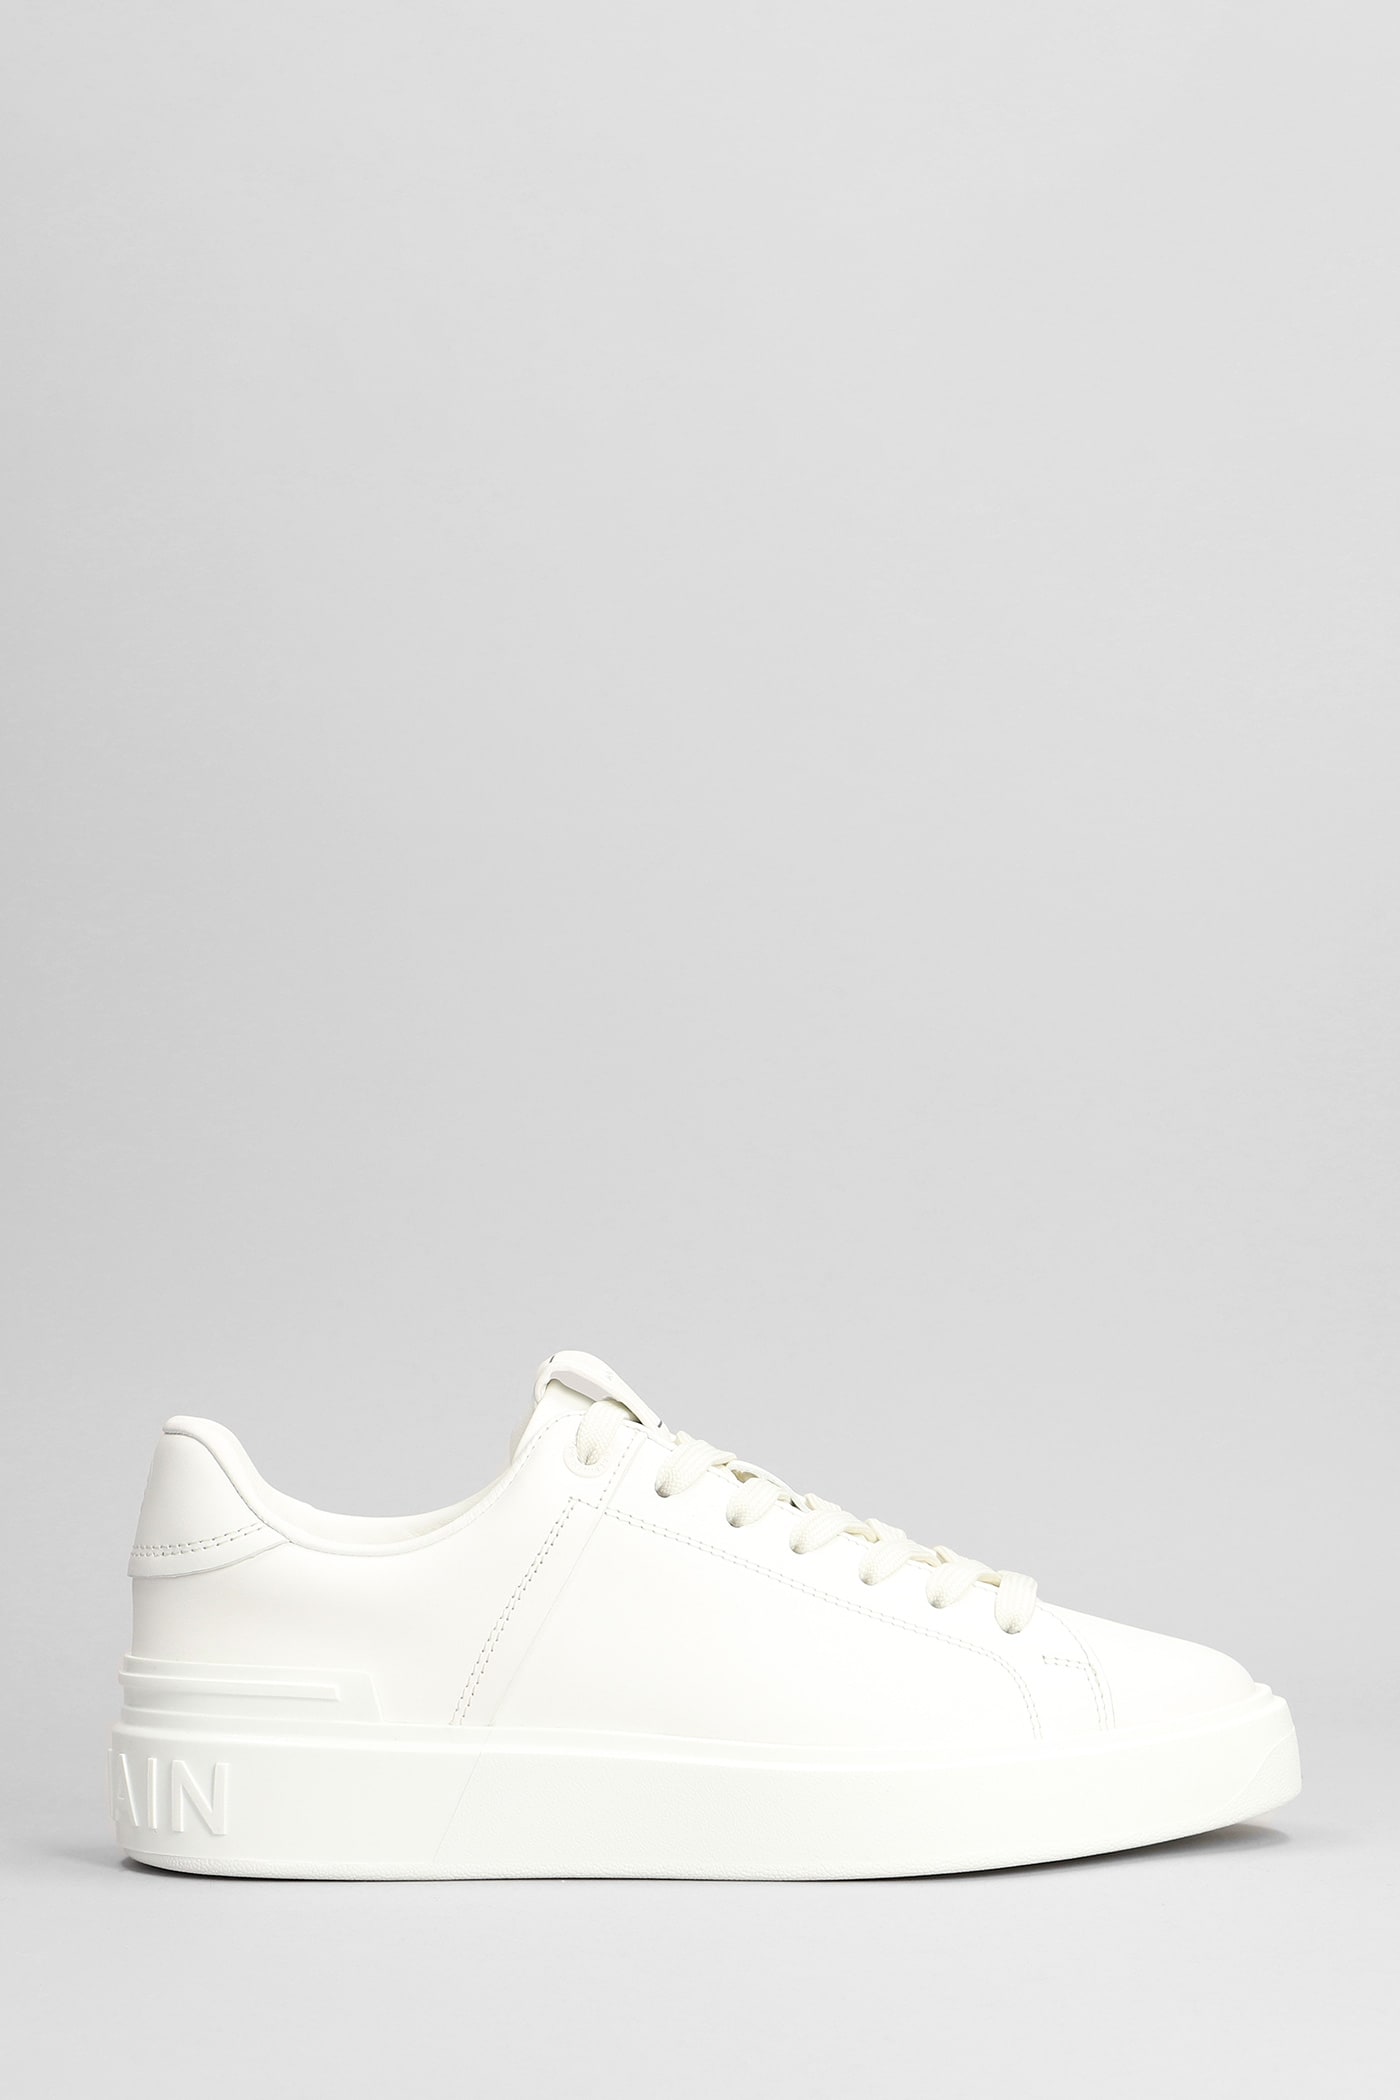 Balmain Sneakers In White Leather